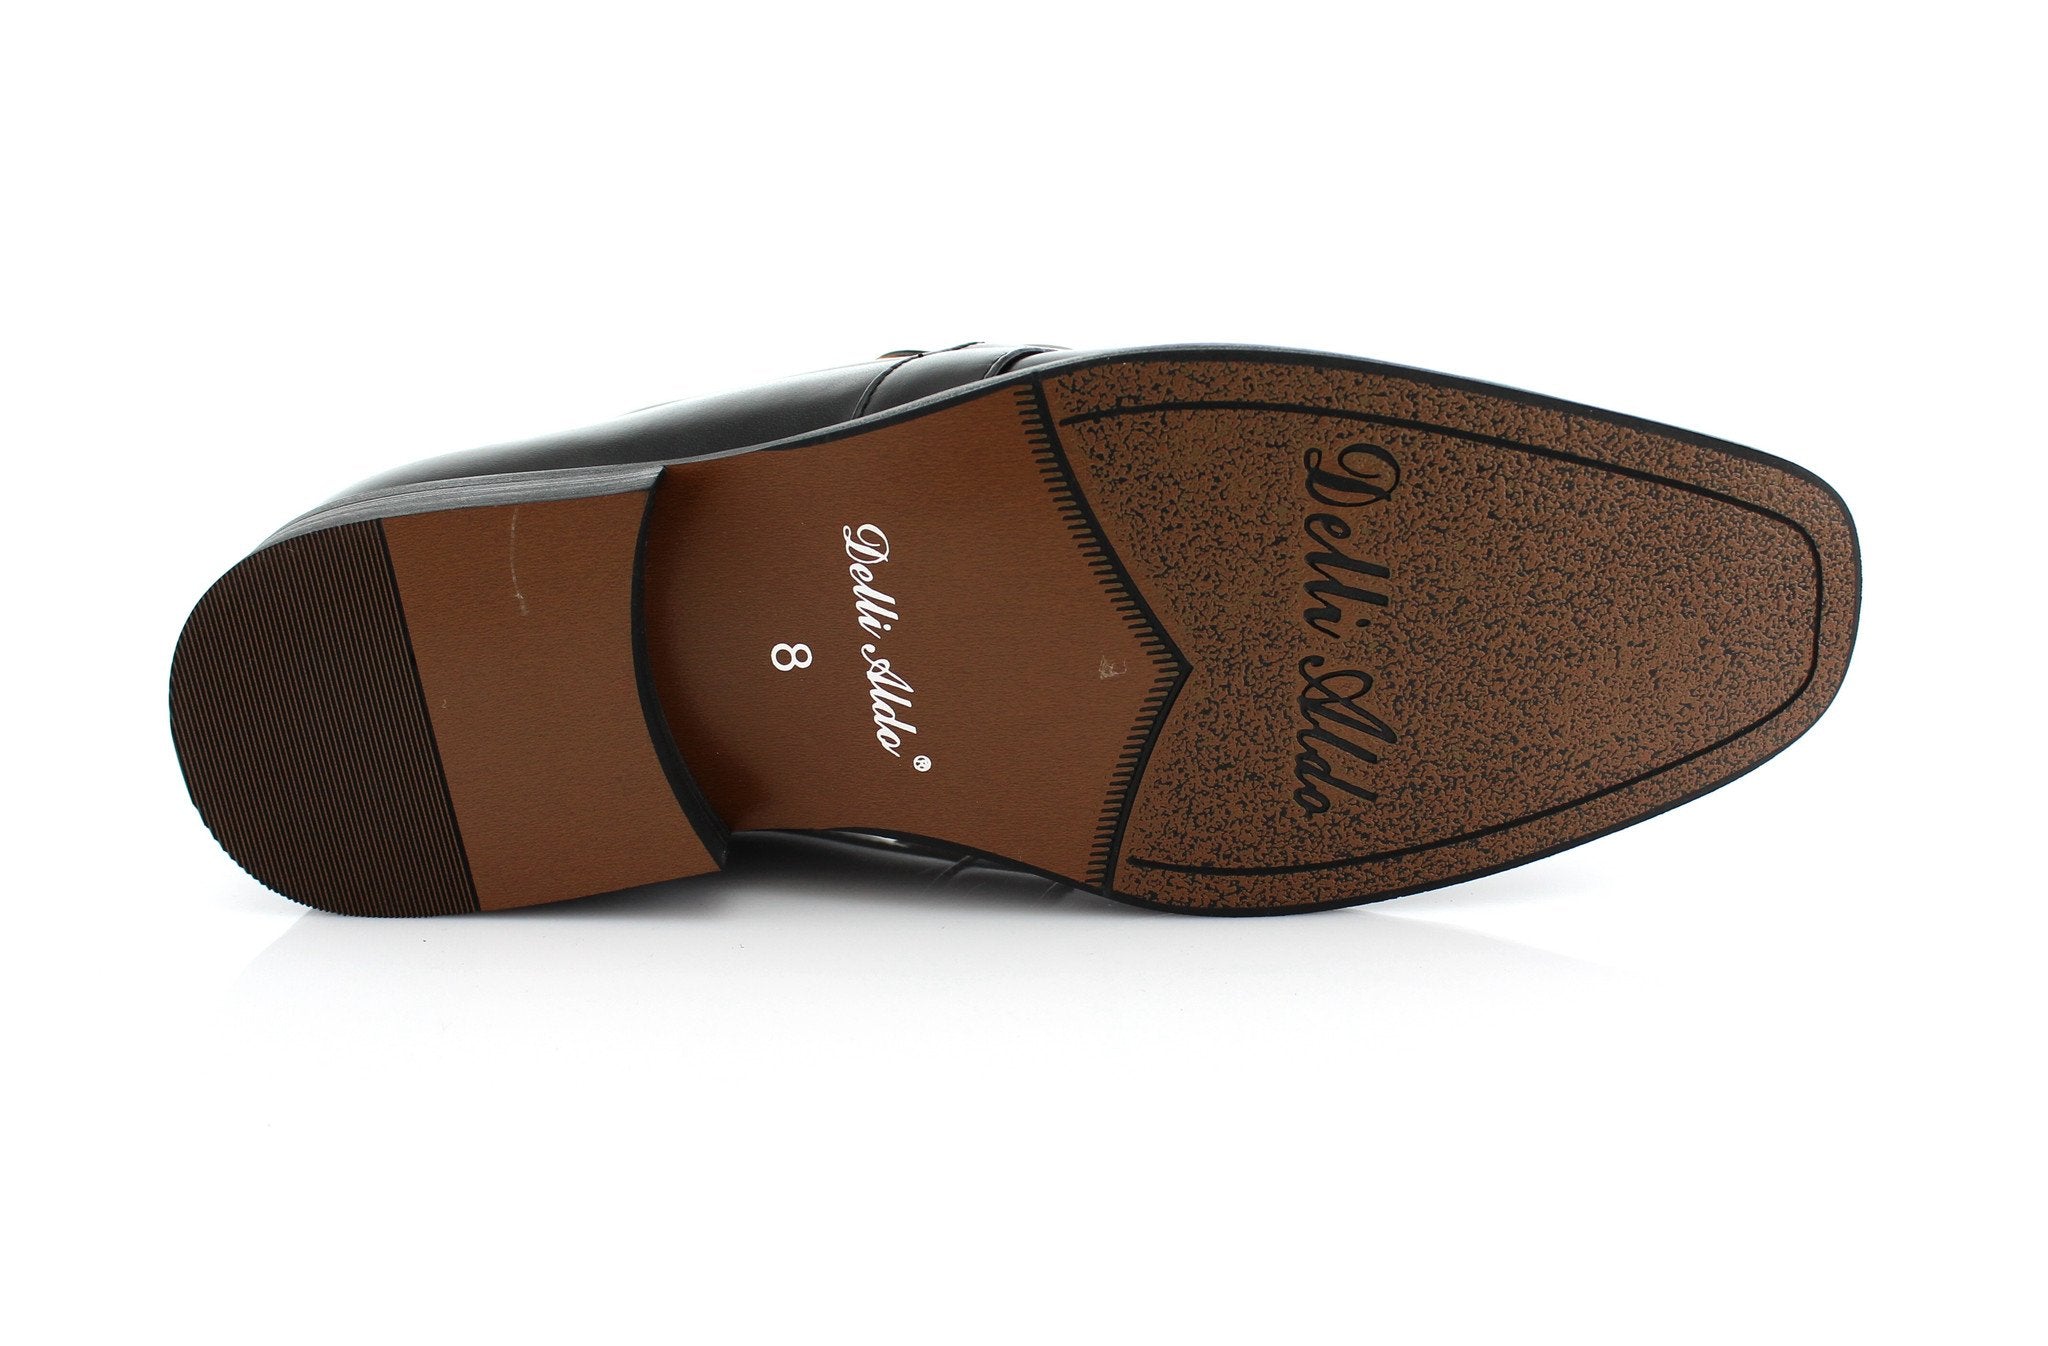 Apron Toe Loafers | Mario by Delli Aldo | Conal Footwear | Bottom Sole Angle View